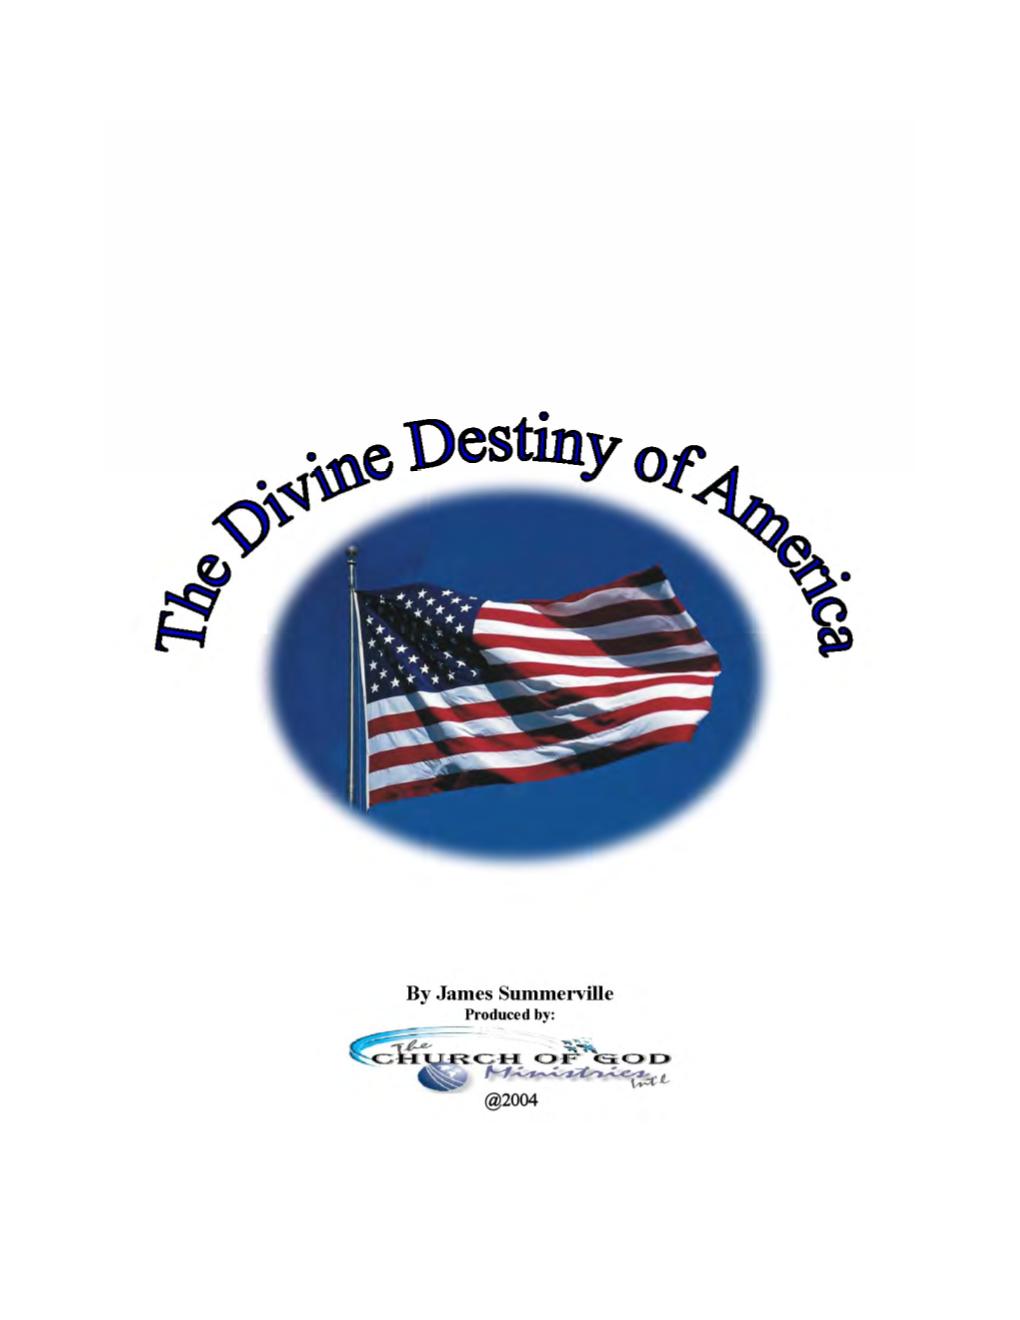 The Divine Destiny of America